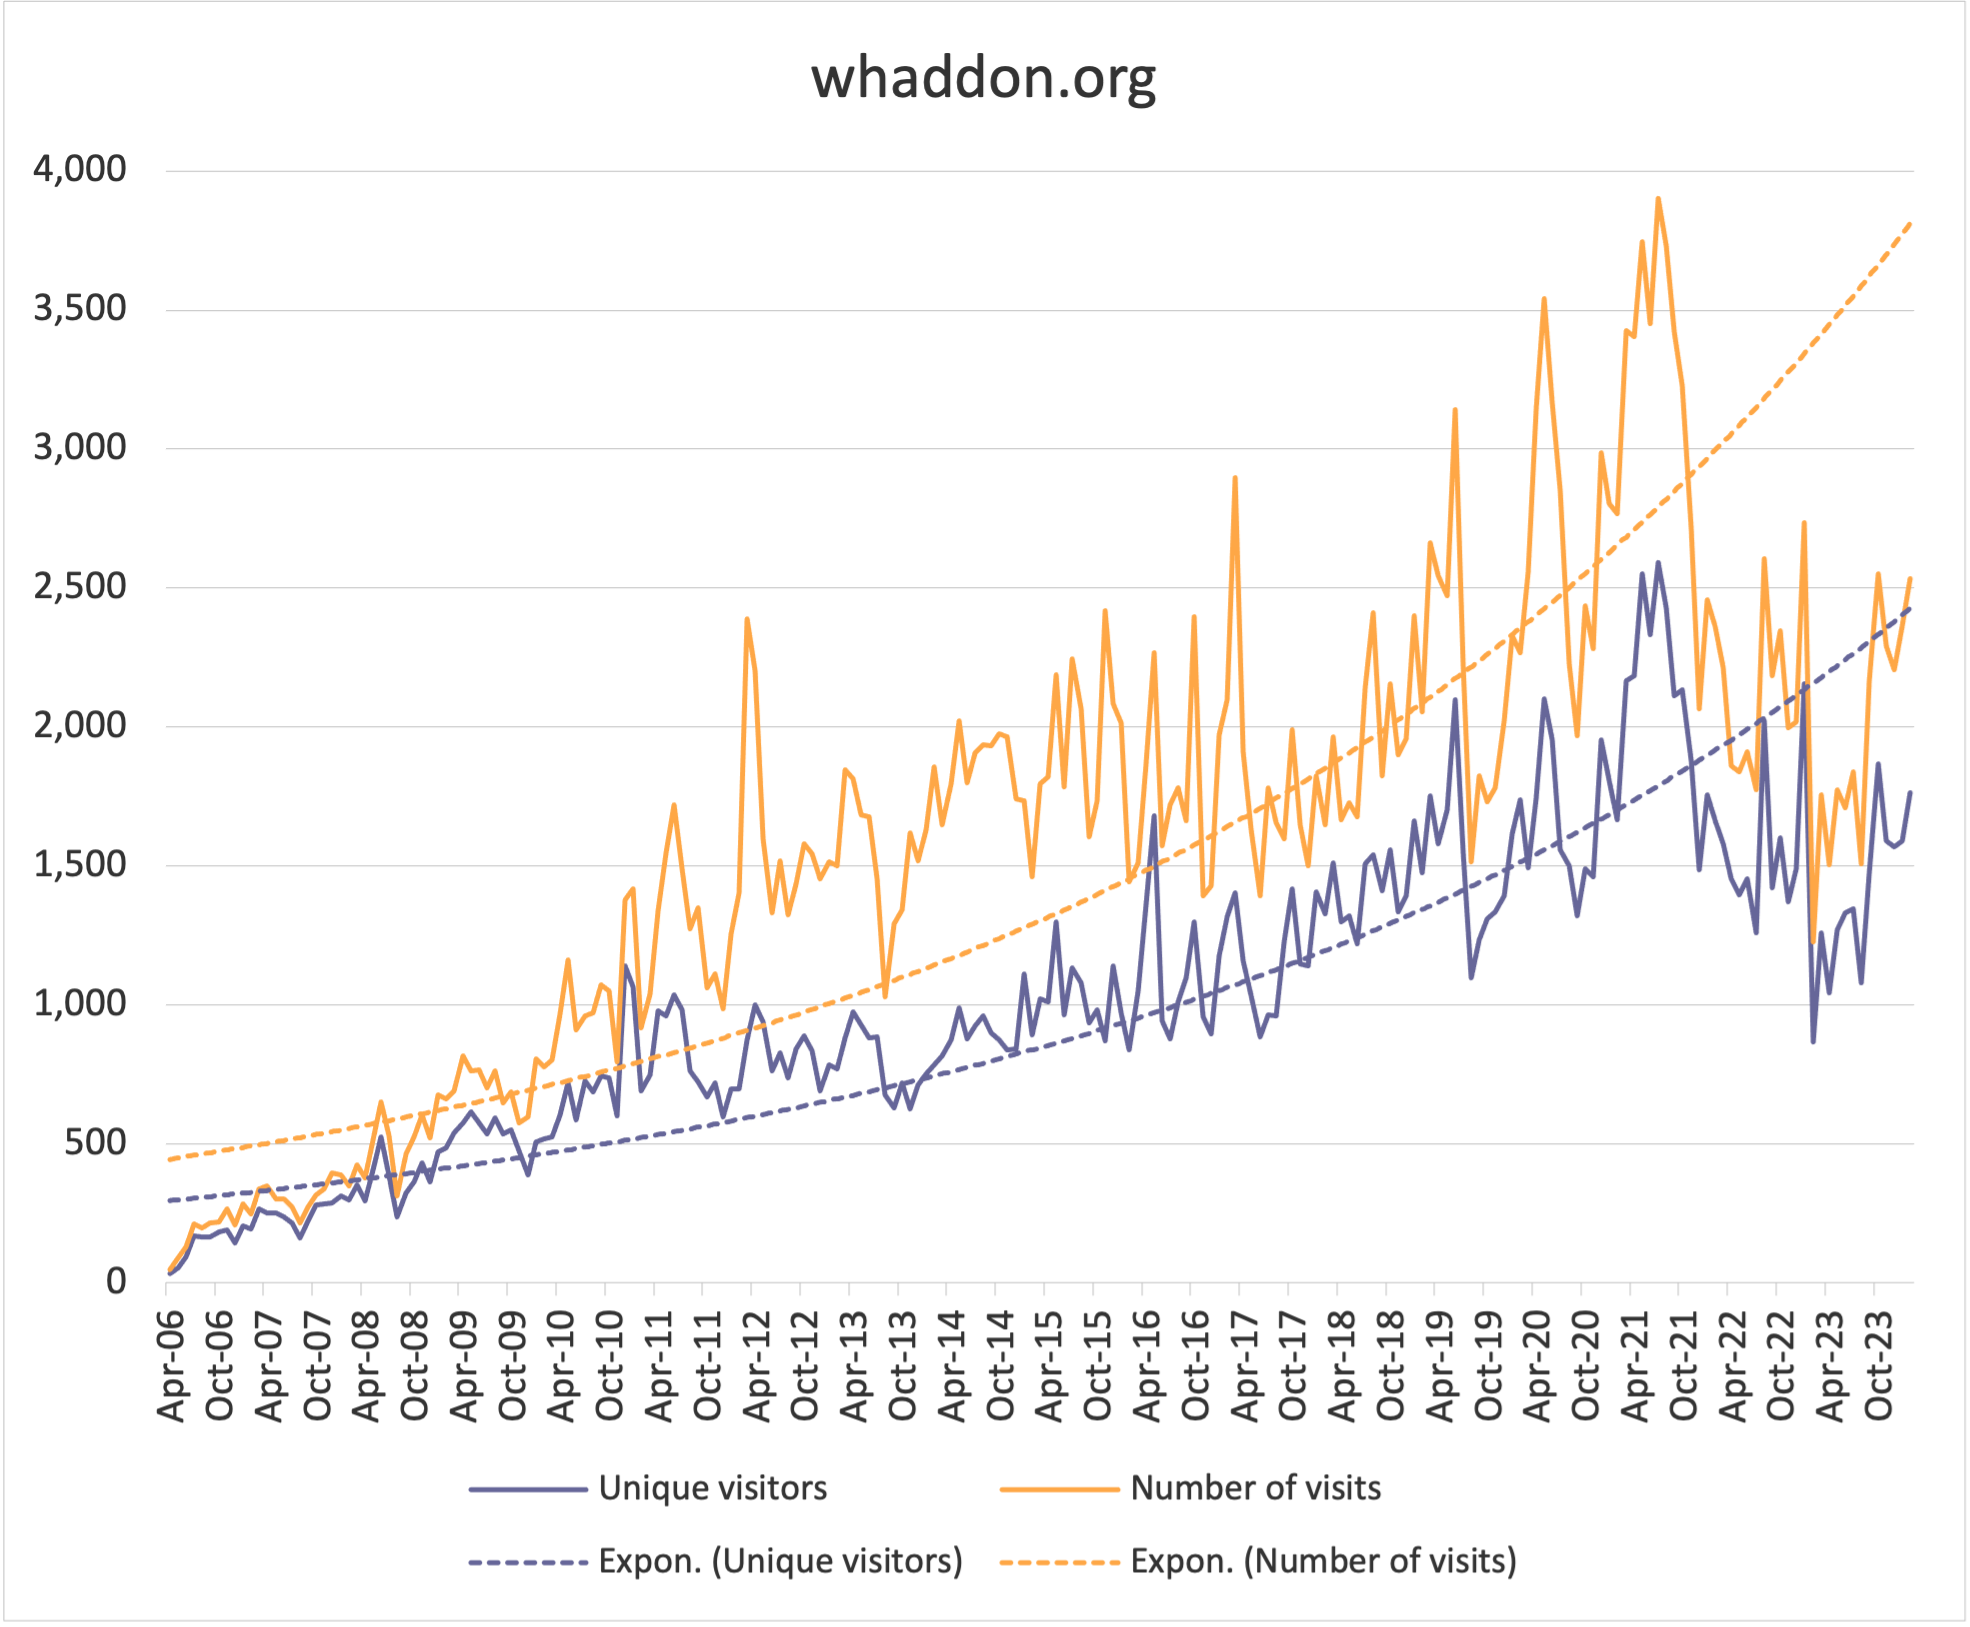 Whaddon web statistics